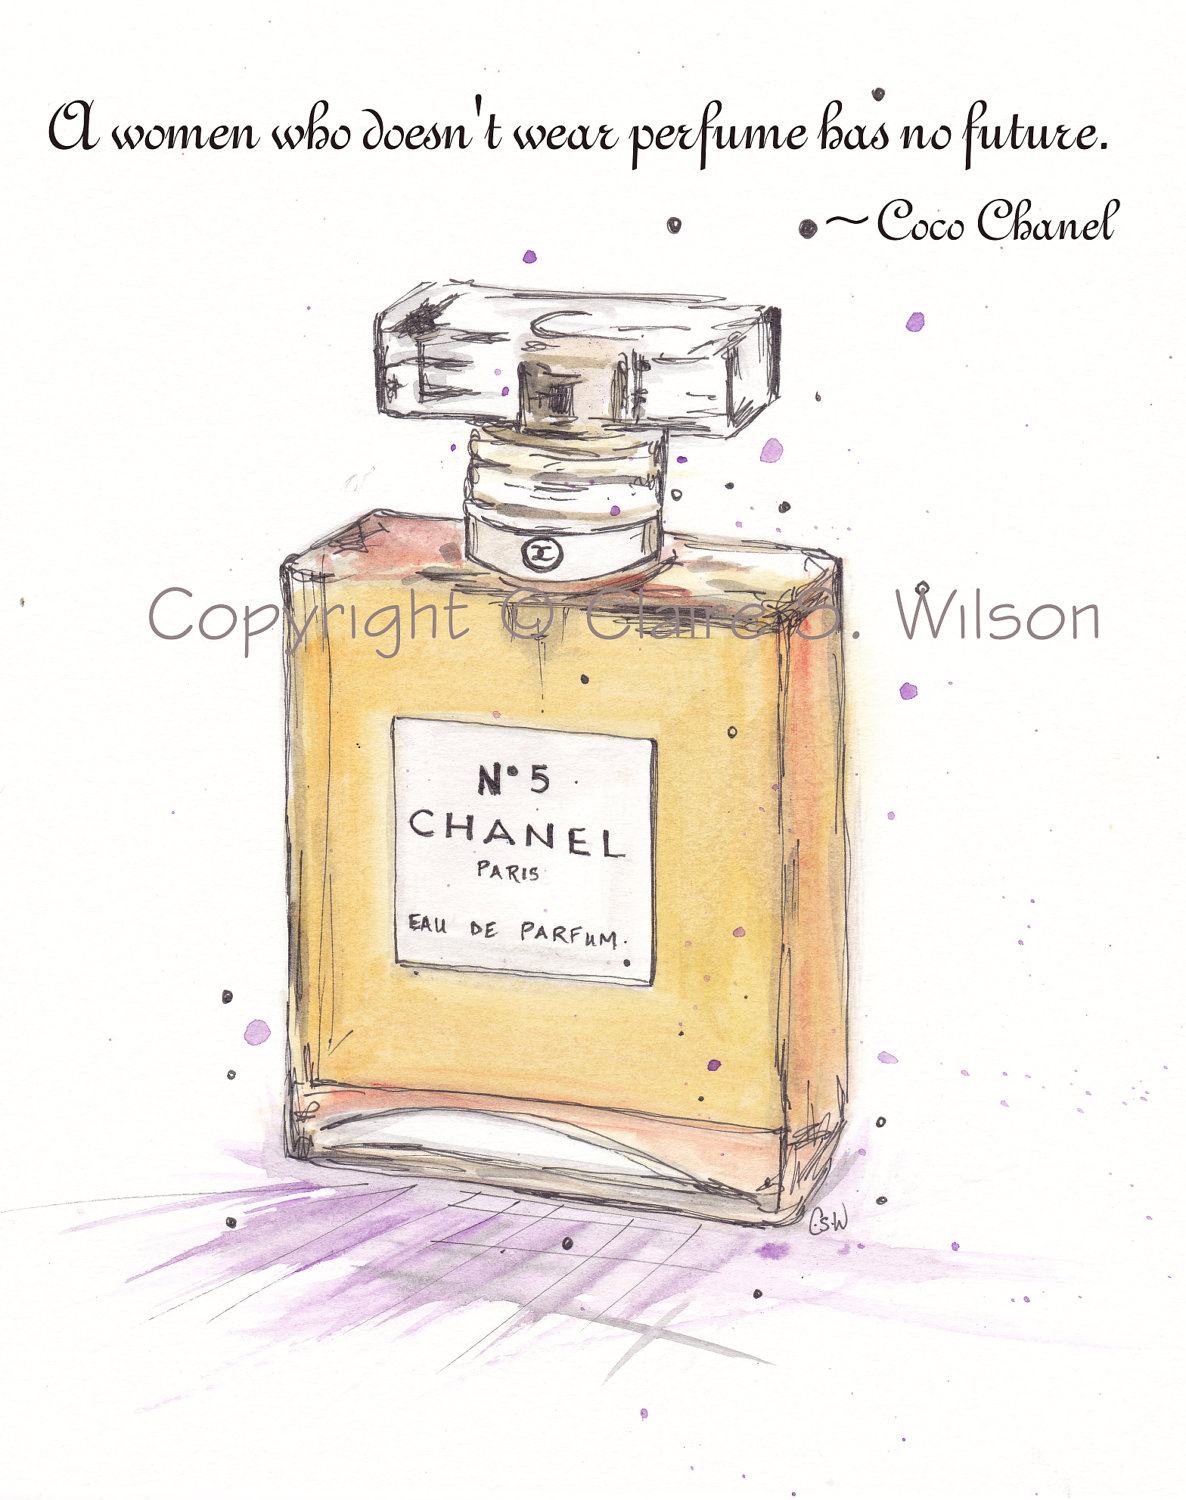 Coco Chanel Perfume Quotes. QuotesGram